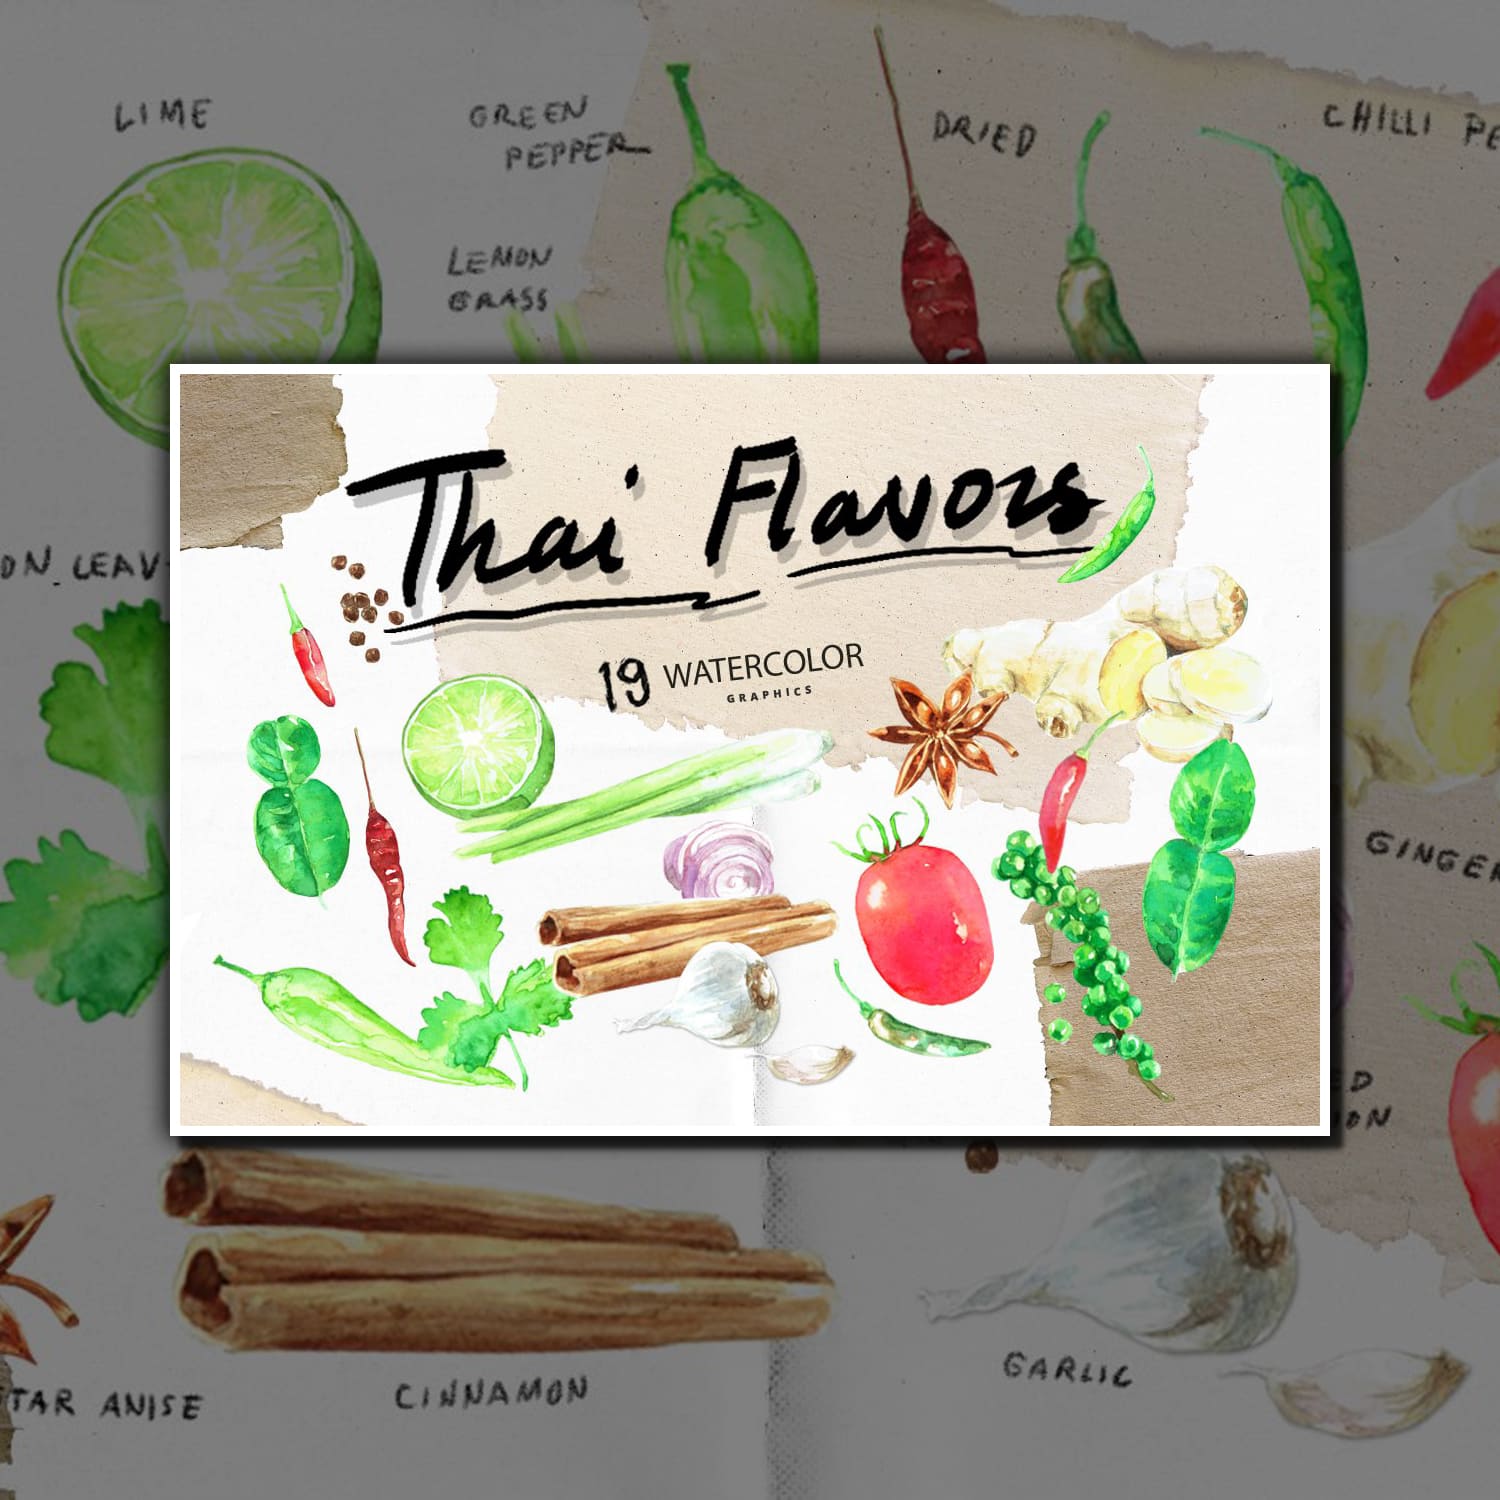 Thai Flavors_ watercolor graphic.